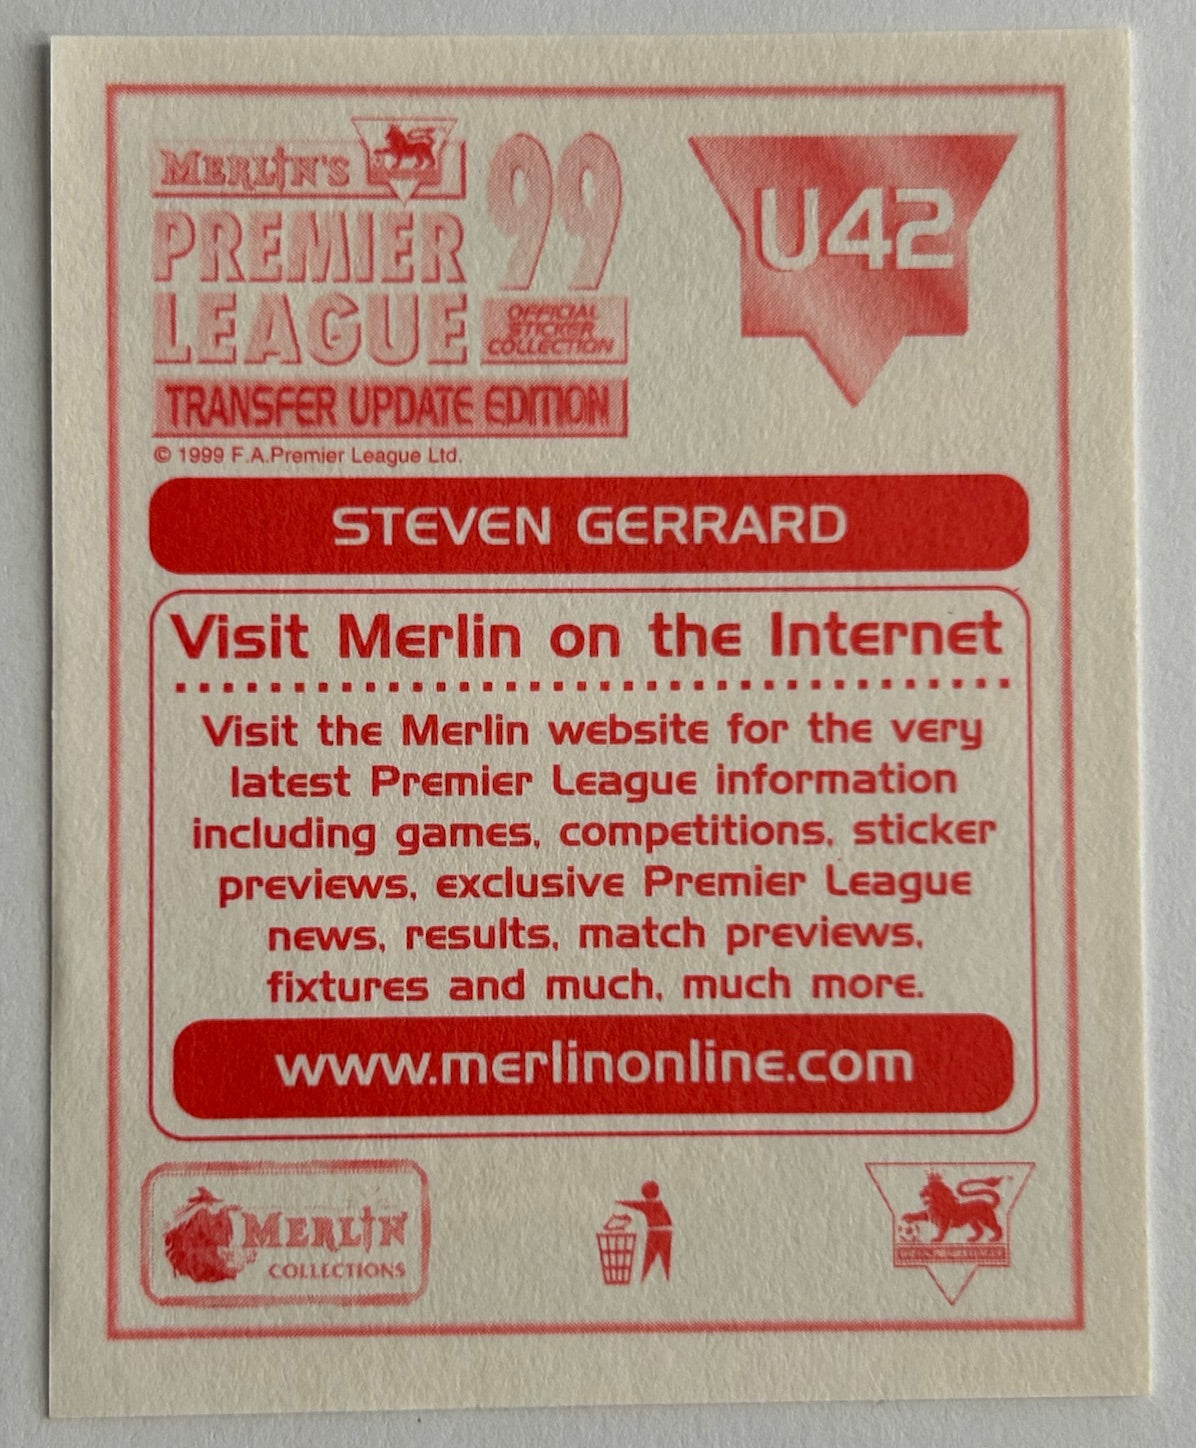 Merlin's Premier League 99 Transfer Update Edition Sticker - STEVEN GERRARD (LIVERPOOL) U42 Rookie RC